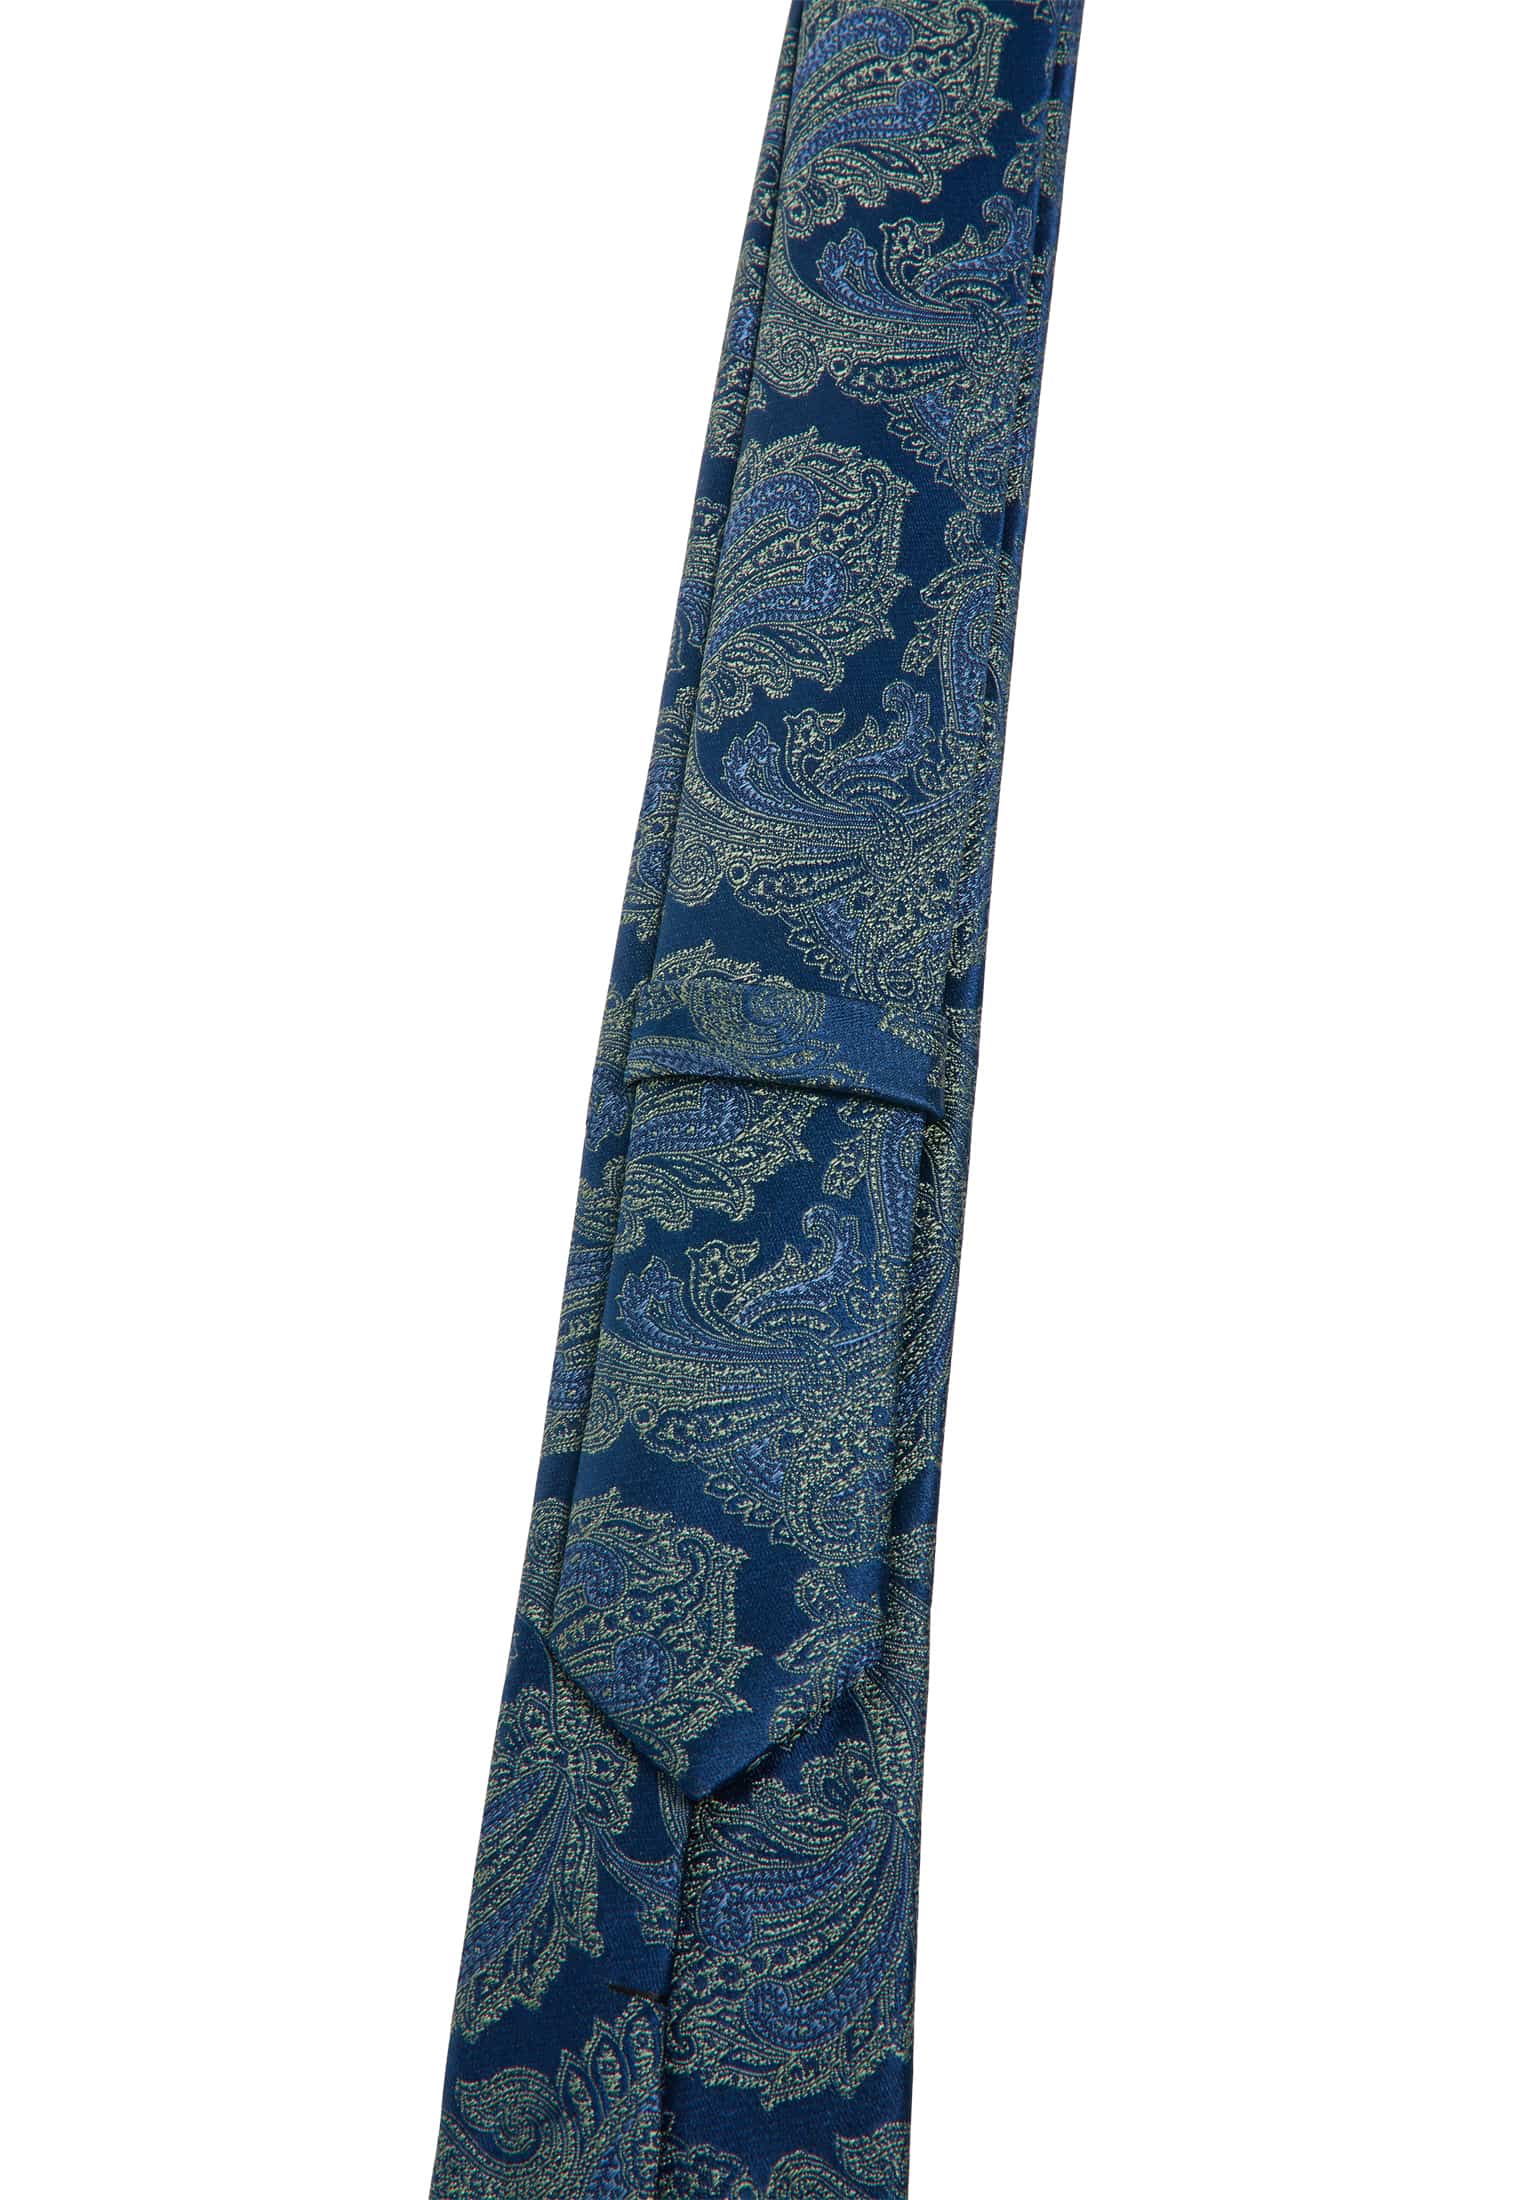 Krawatte in blau/grün gemustert | blau/grün | 142 | 1AC01915-81-48-142